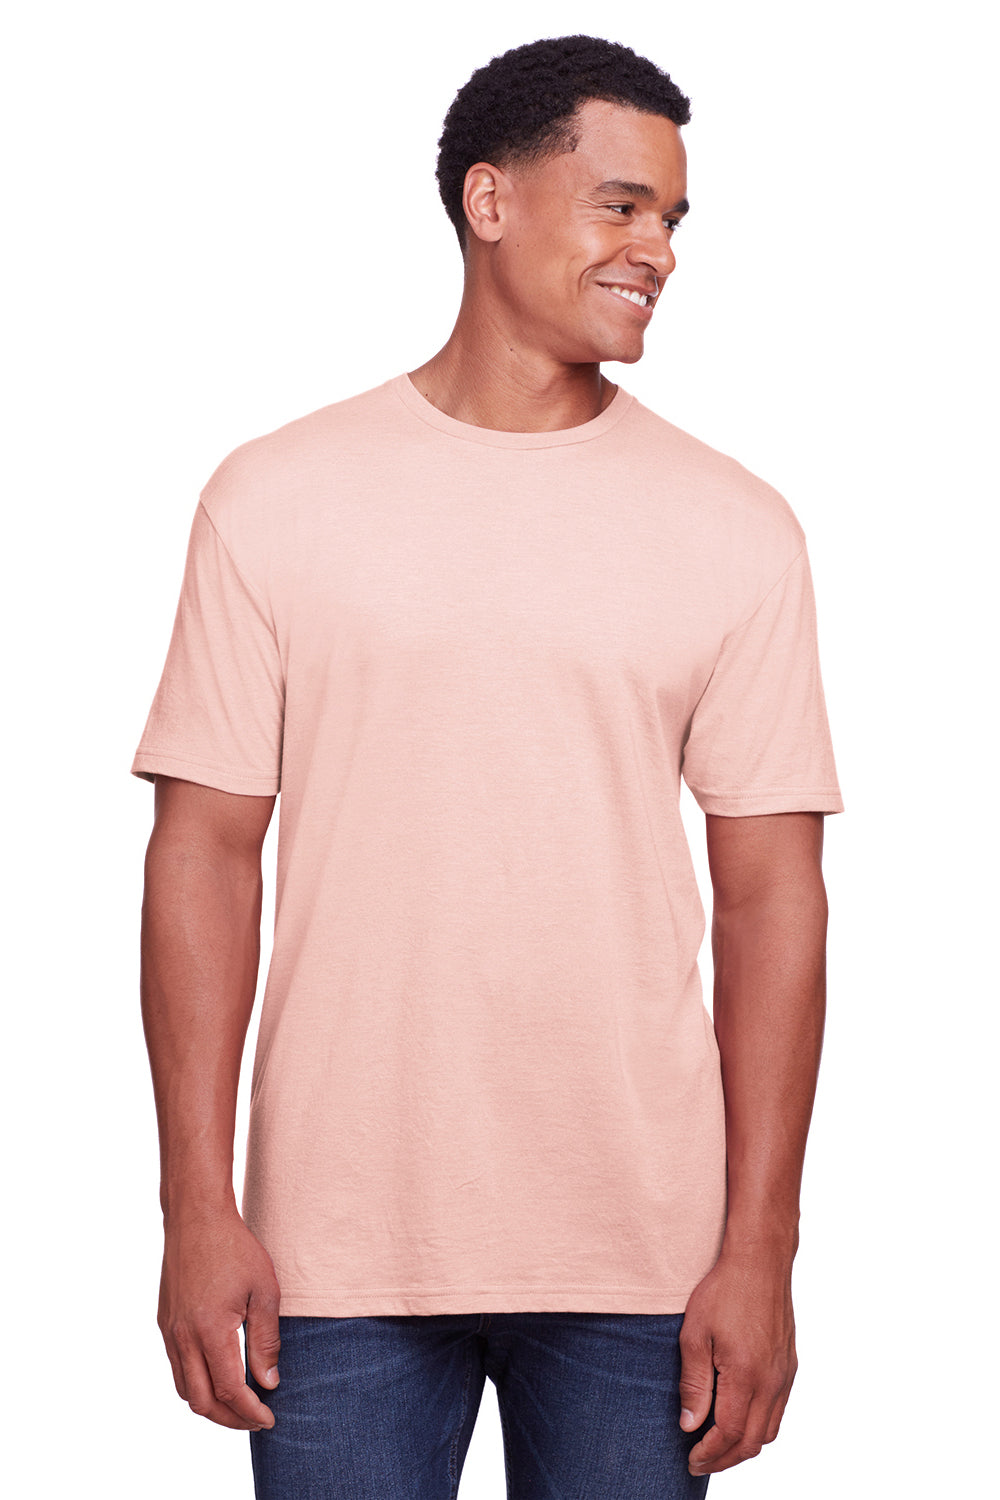 Gildan G670 Mens Softstyle CVC Short Sleeve Crewneck T-Shirt Dusty Rose Pink Front